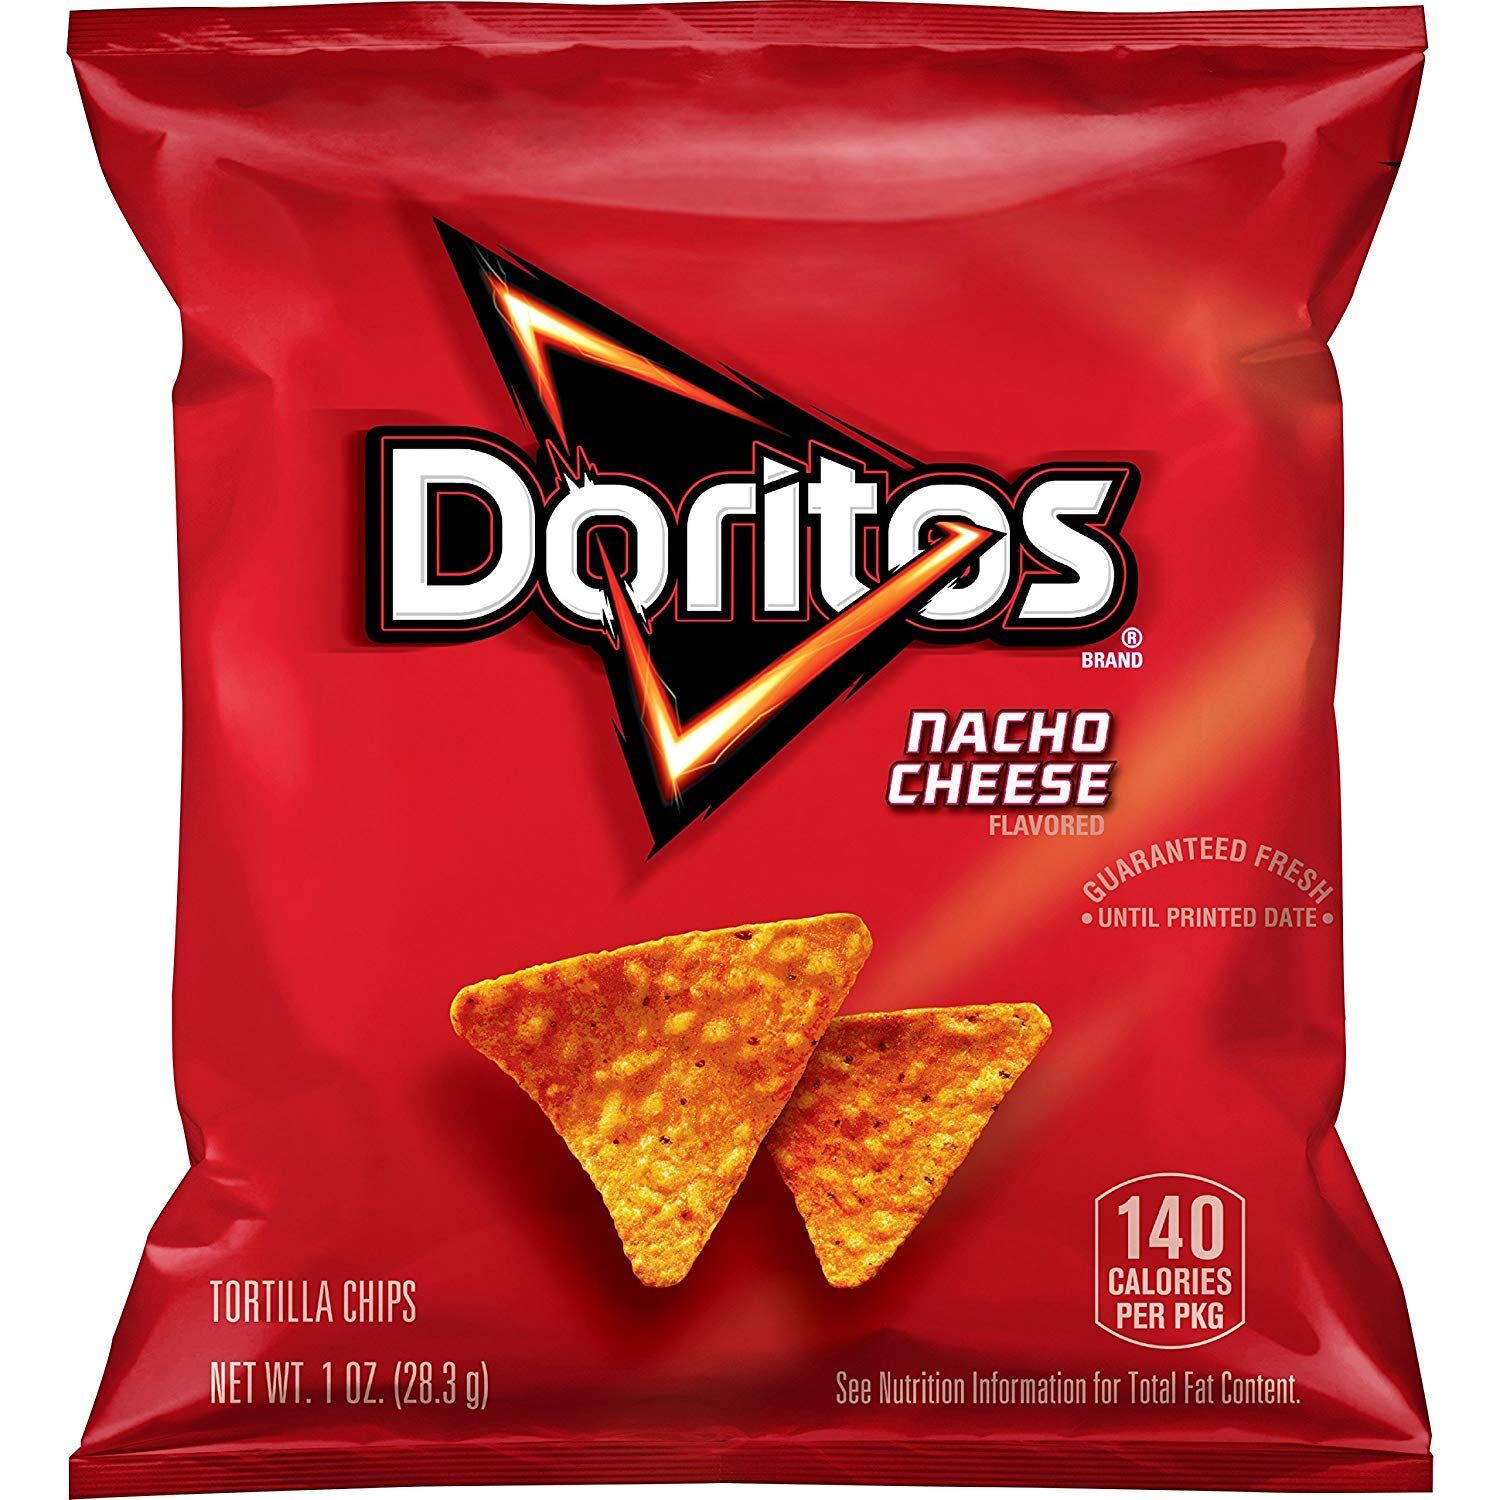 What was the original doritos flavor